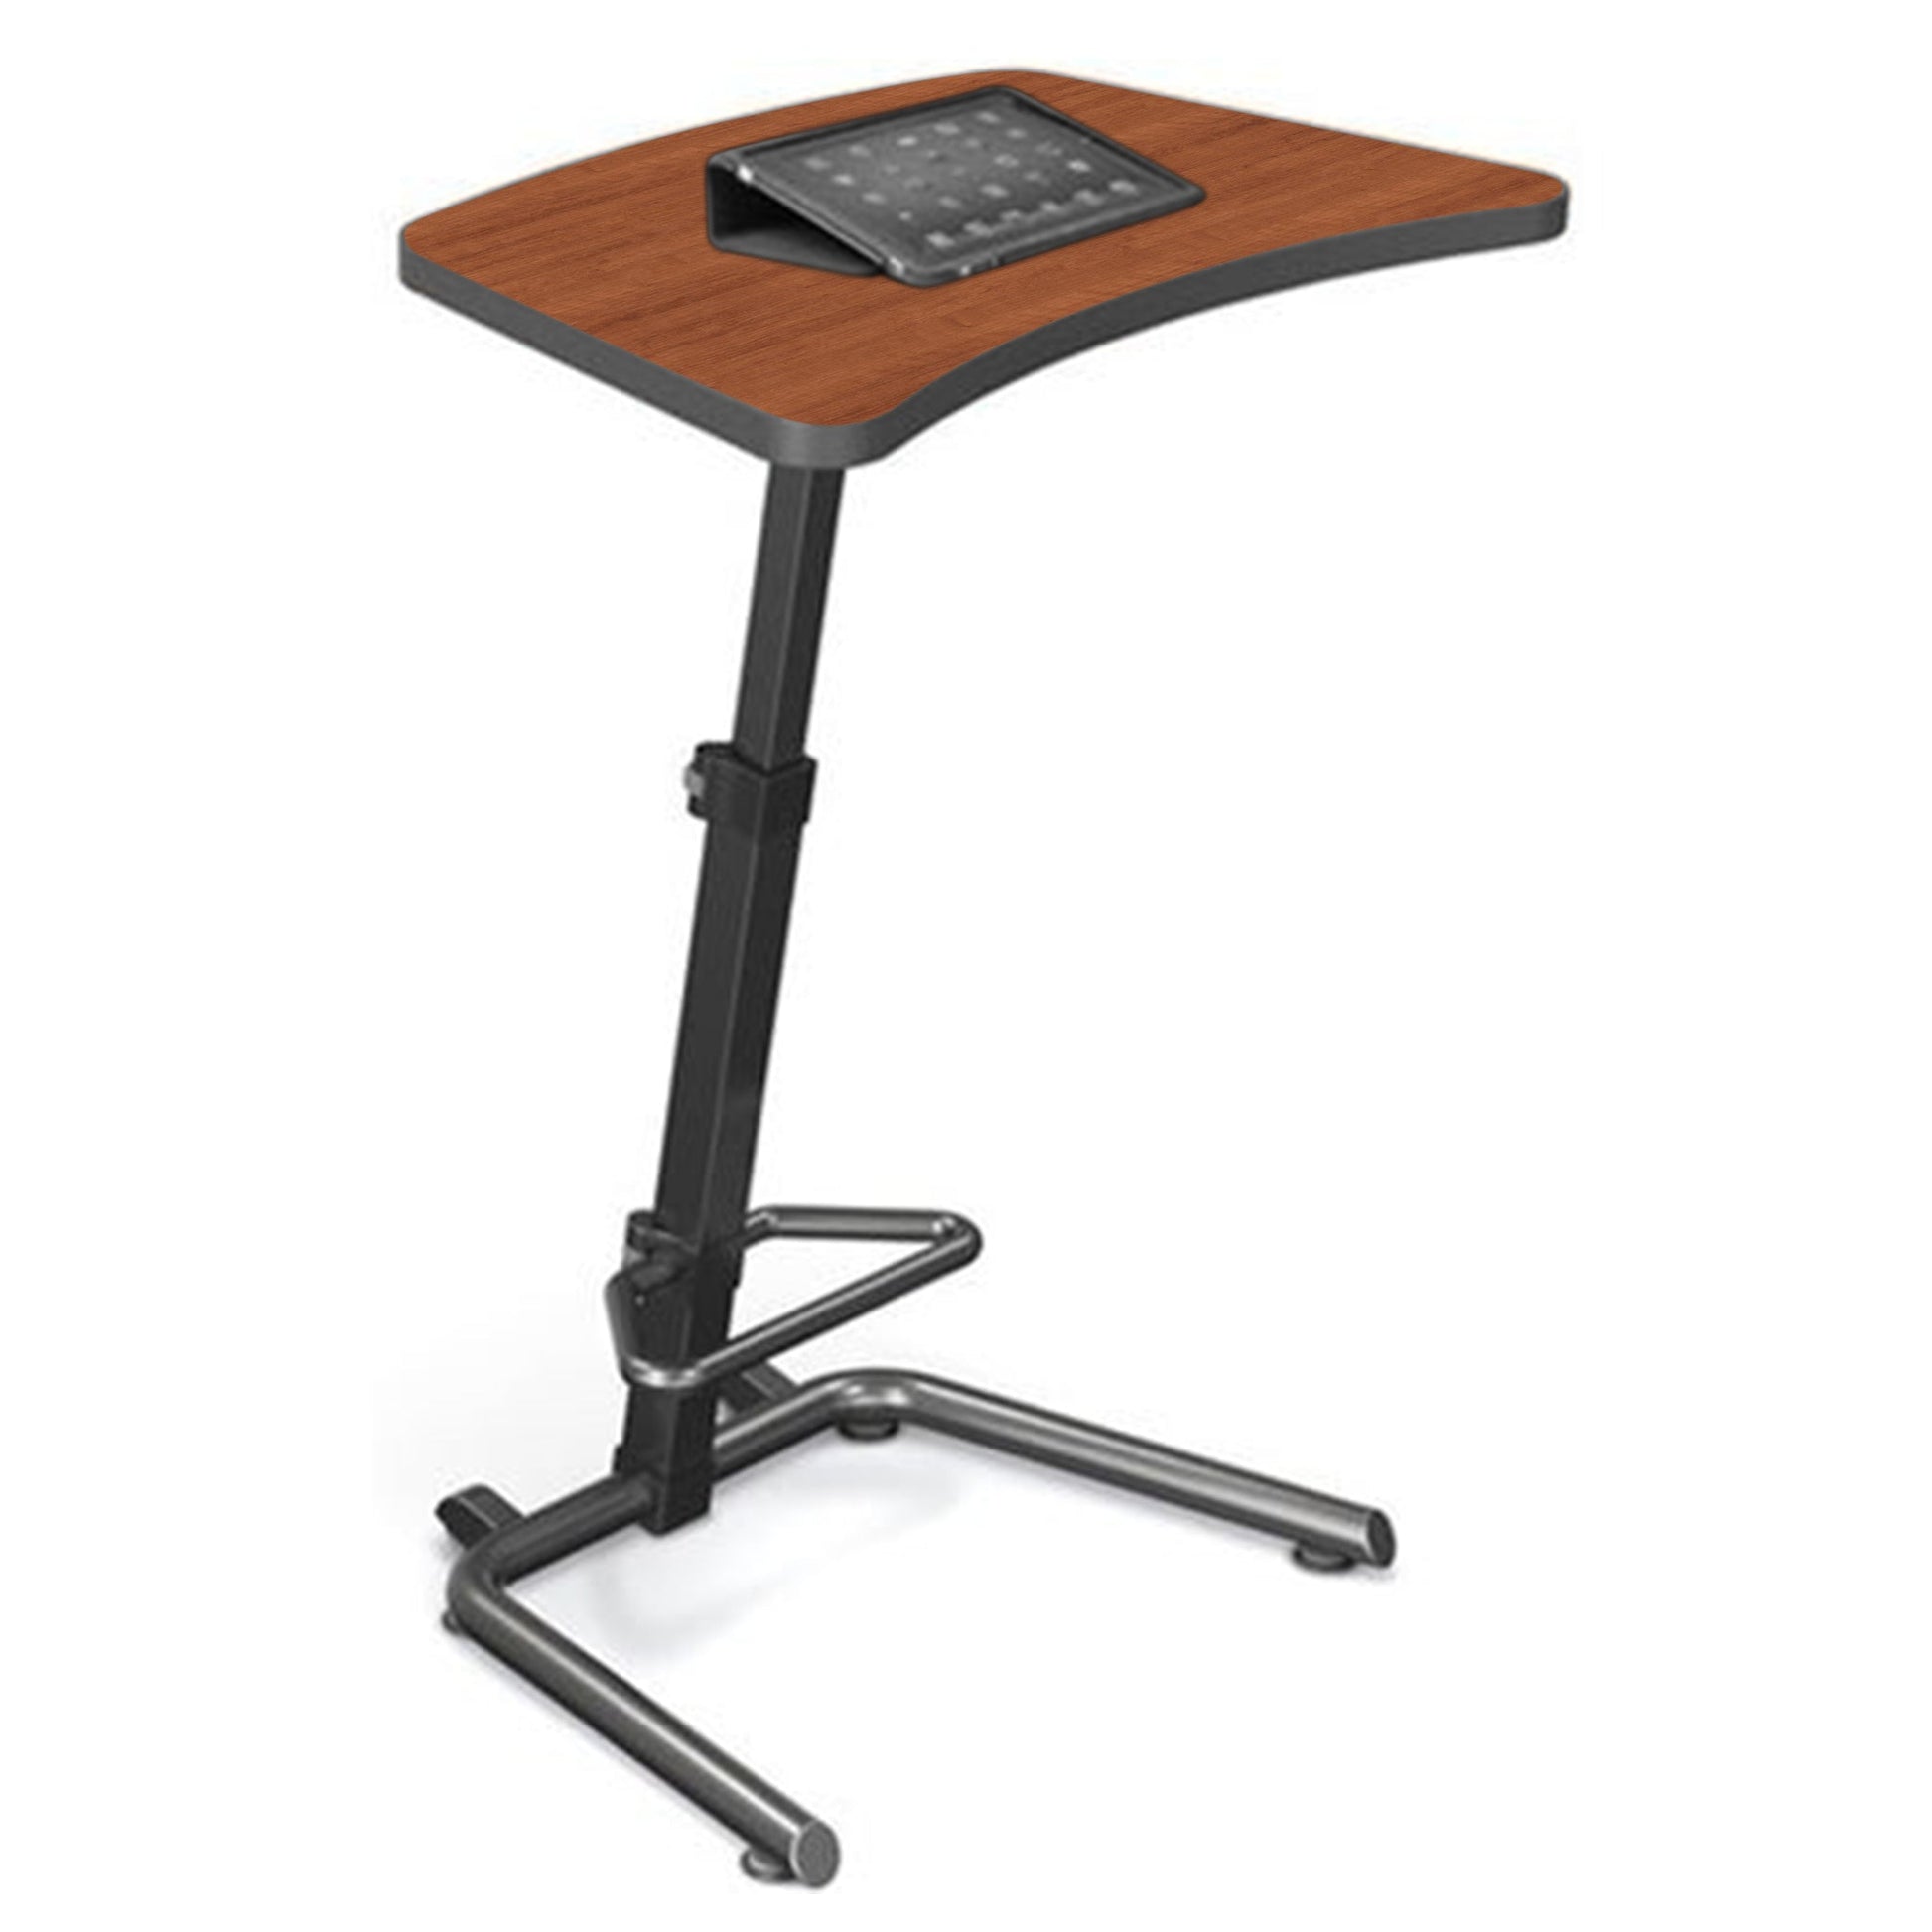 Mooreco Up - Rite Student Table - Backer Back Surface - Black Edgeband (Mooreco 90532) - SchoolOutlet